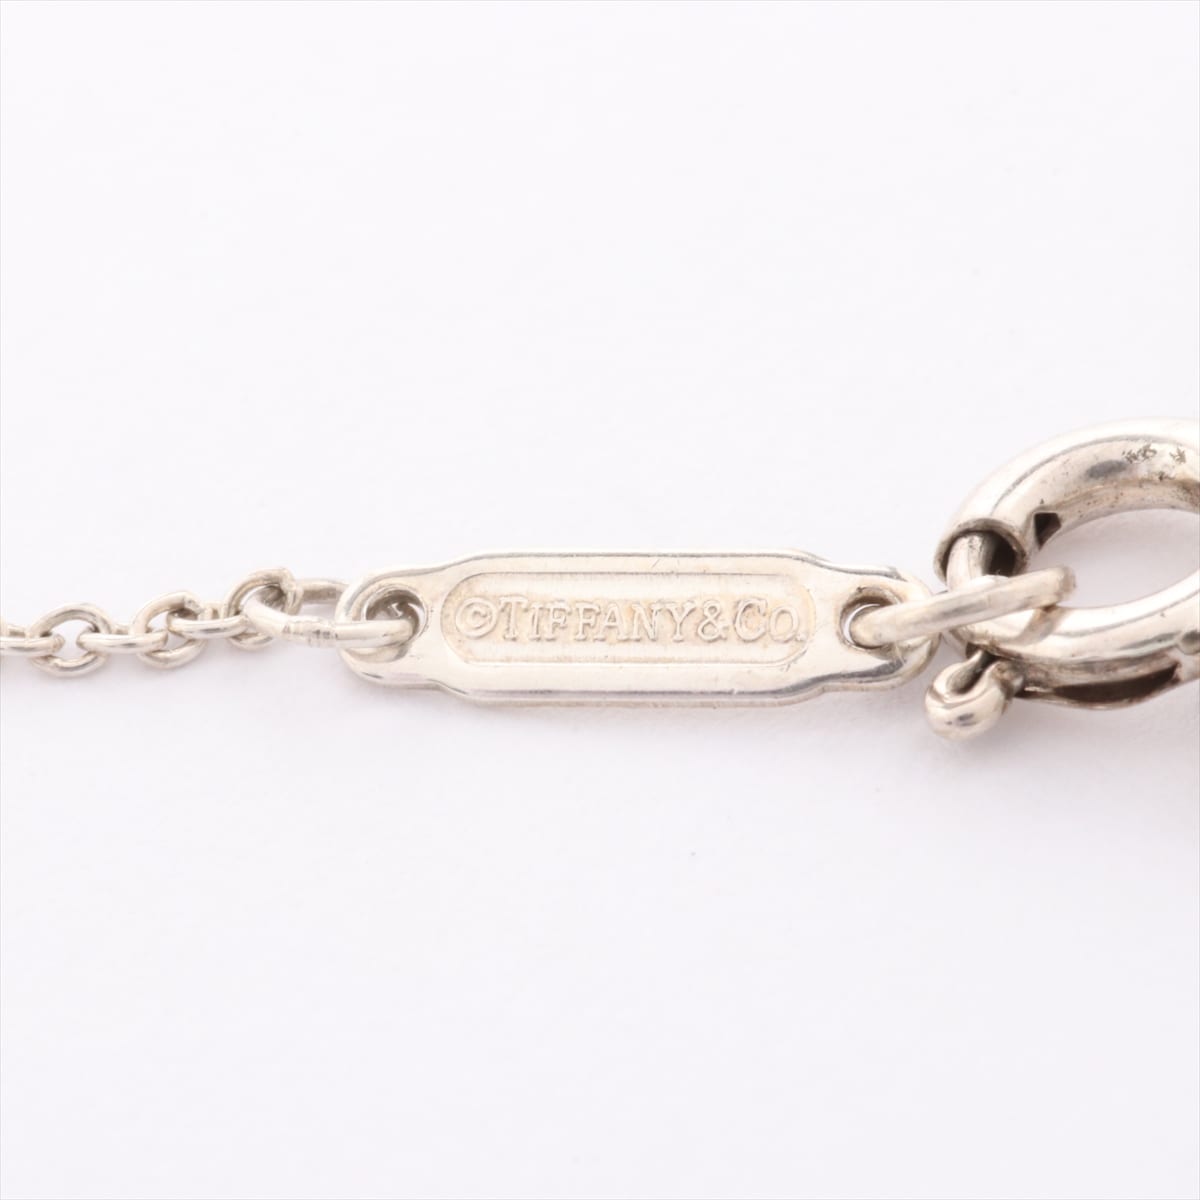 Tiffany 1837 Circle Necklace 925 3.8g Silver